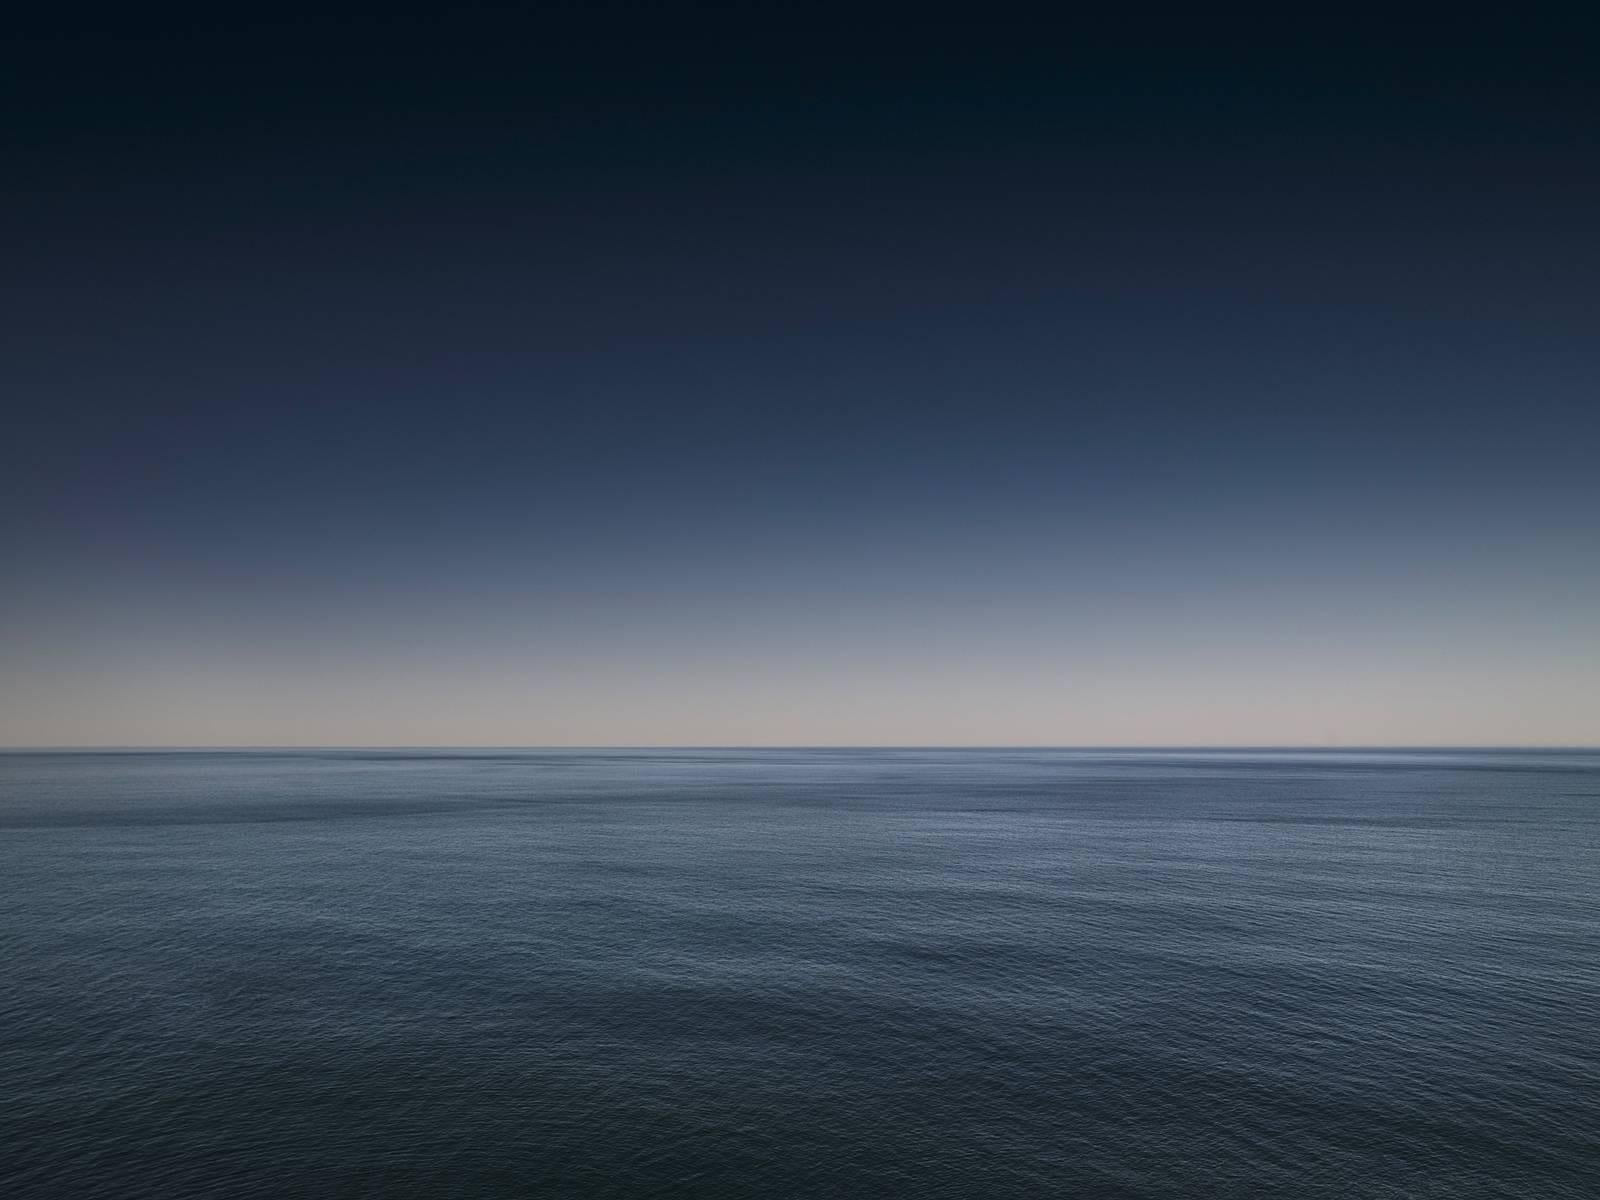 Seascape I (framed) - large format photograph of monochromatic horizon and sea